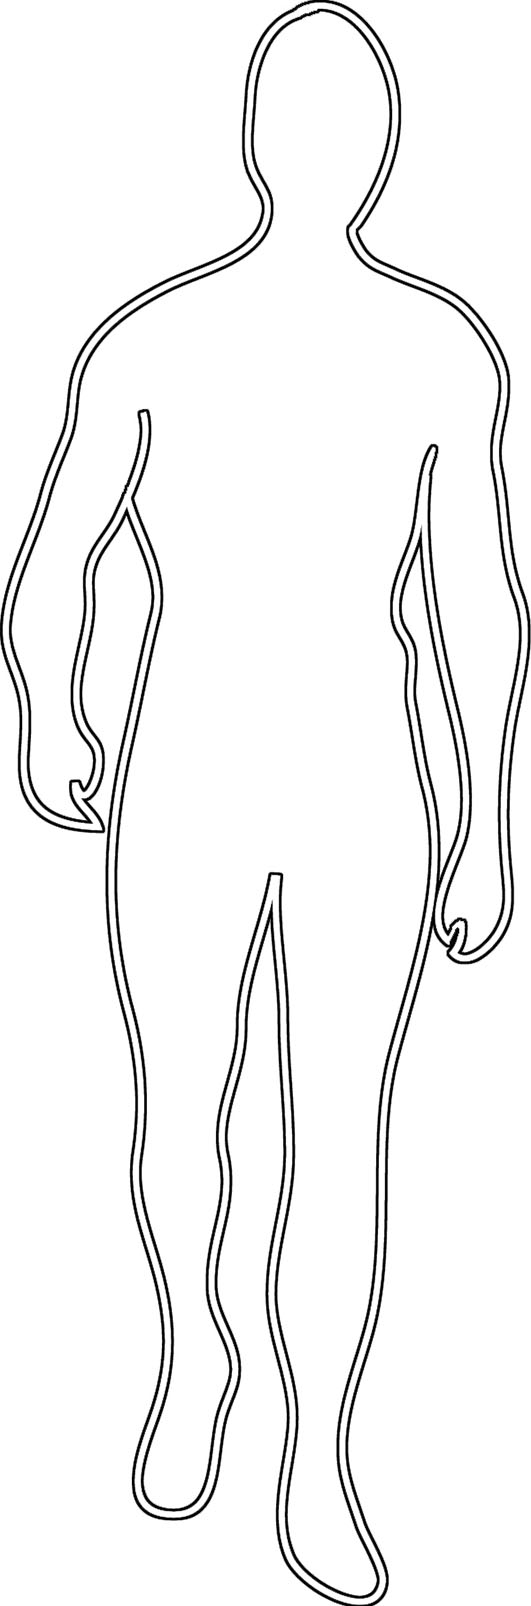 silhouette outline man walking